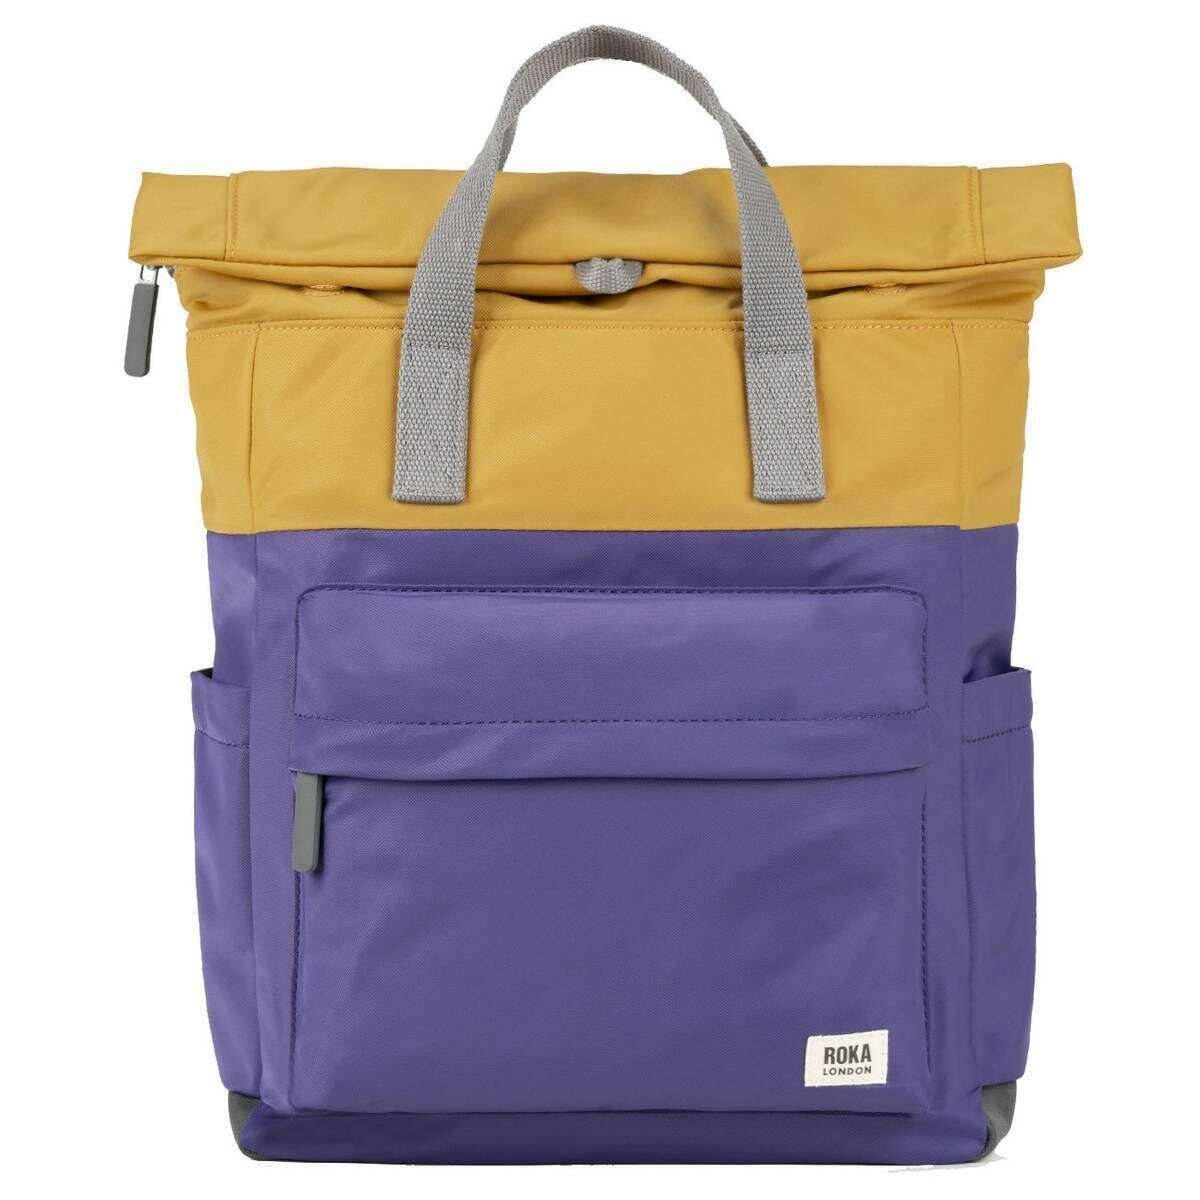 Roka Canfield B Medium Creative Waste Two Tone Recycled Nylon Backpack - Corn Yellow/Mulberry Purple